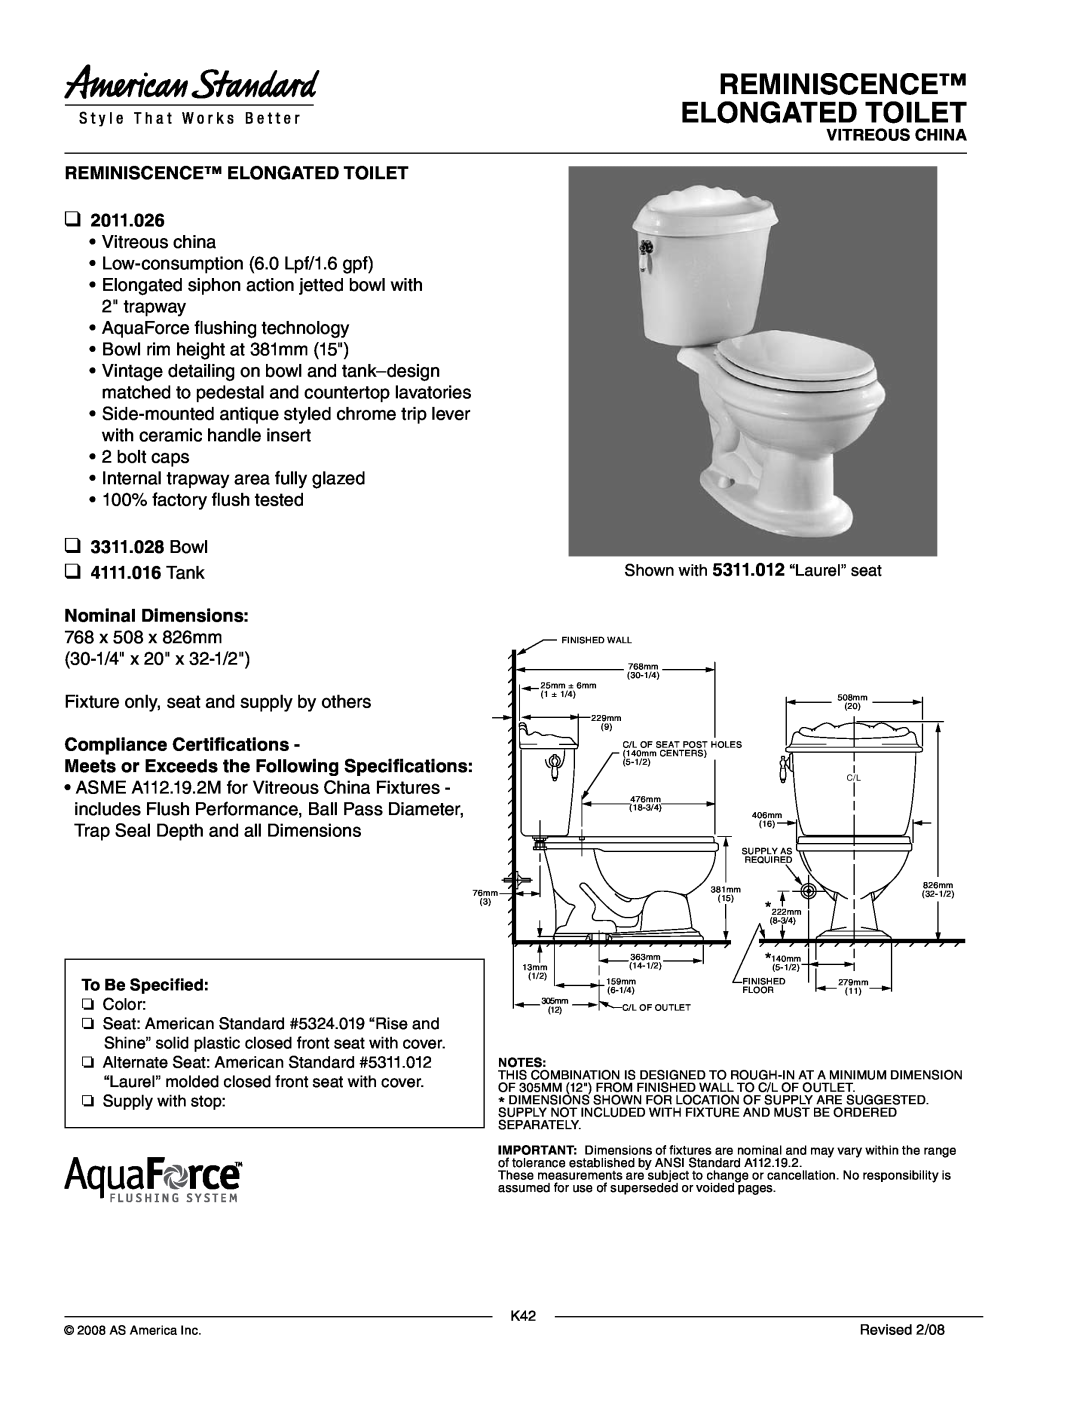 American Standard 4111.016, 3311.028 dimensions Reminiscence Elongated Toilet, Bowl, Tank, Nominal Dimensions 